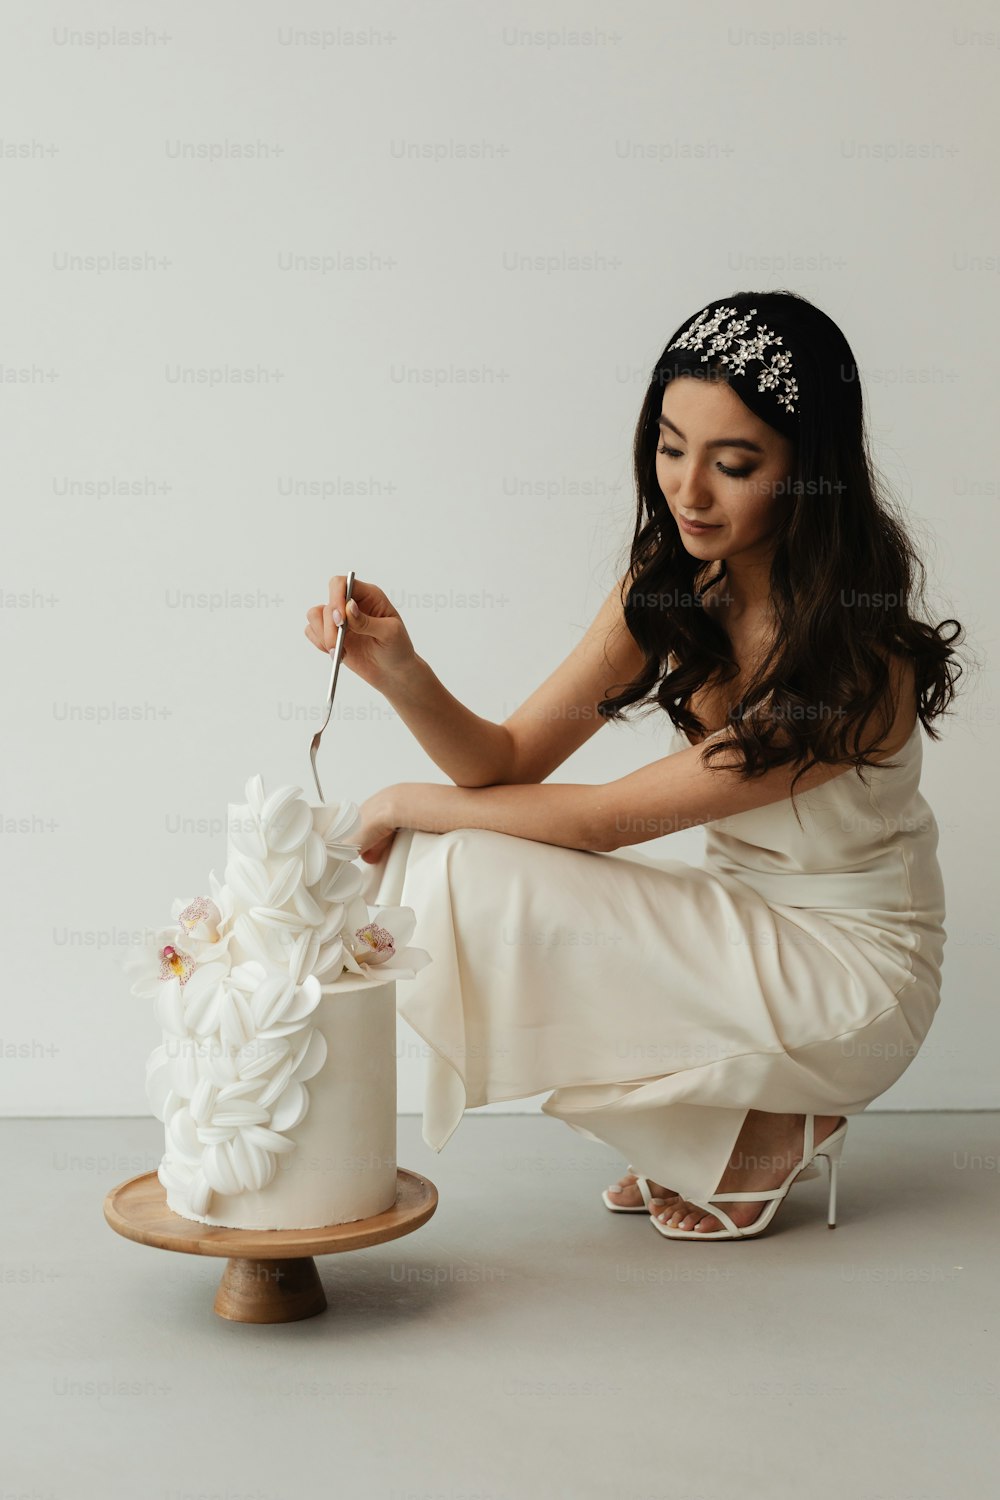 a woman in a white dress cutting a wedding cake